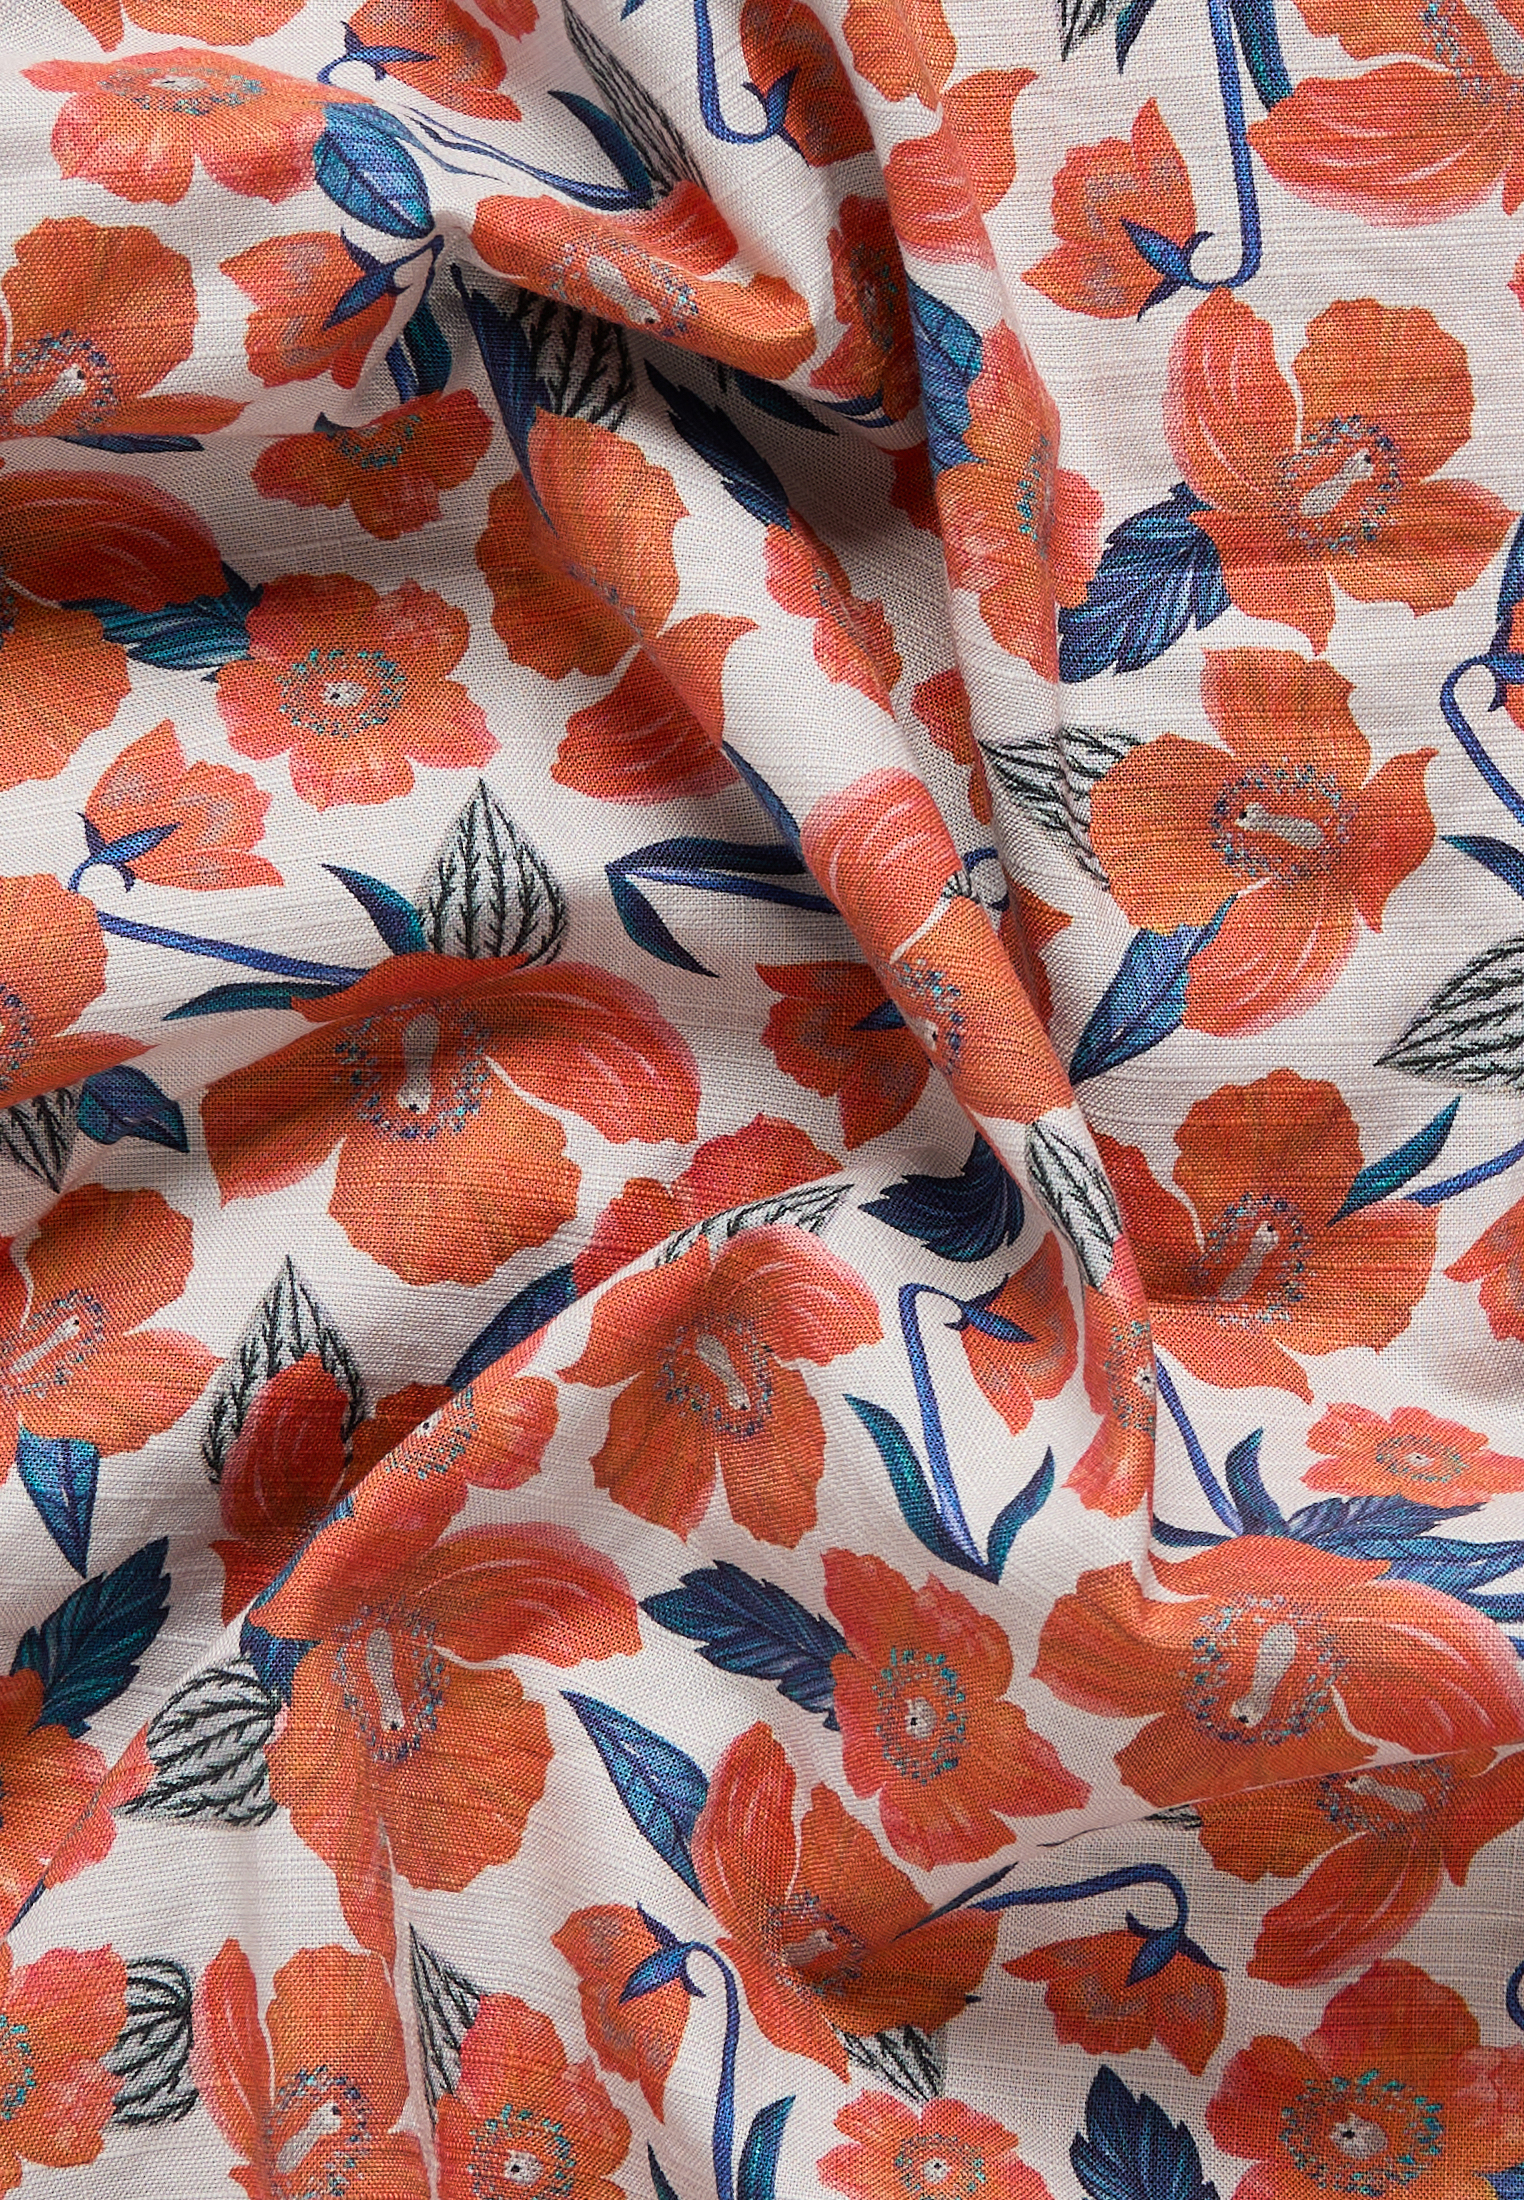 S orange orange short sleeve | | FIT | REGULAR printed Shirt | 1SH04089-08-01-S-1/2 in